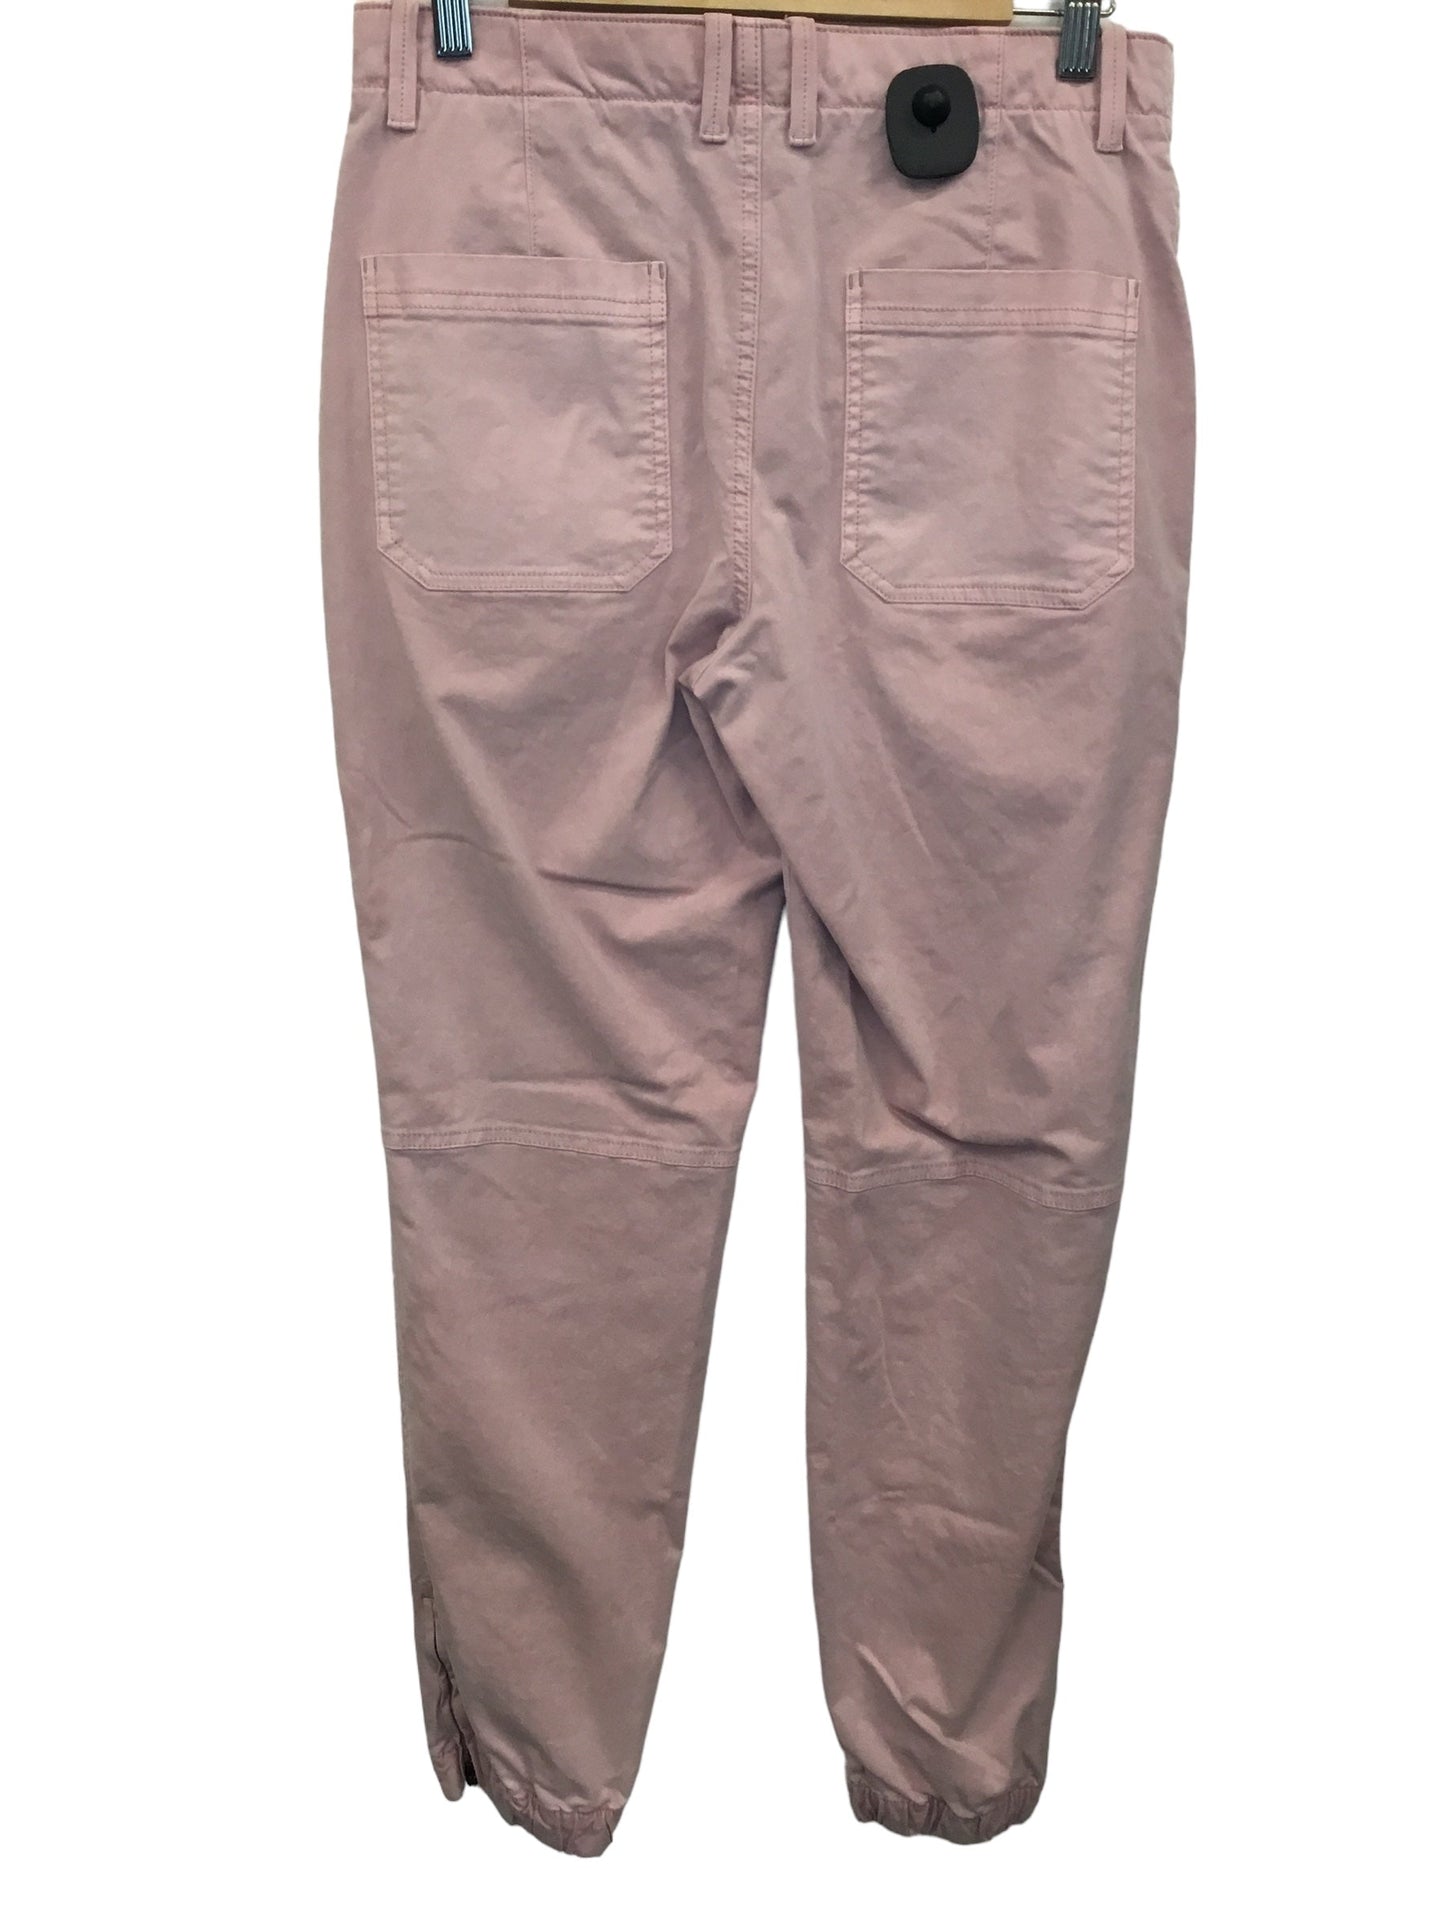 Pajama Pants By Banana Republic  Size: 6long